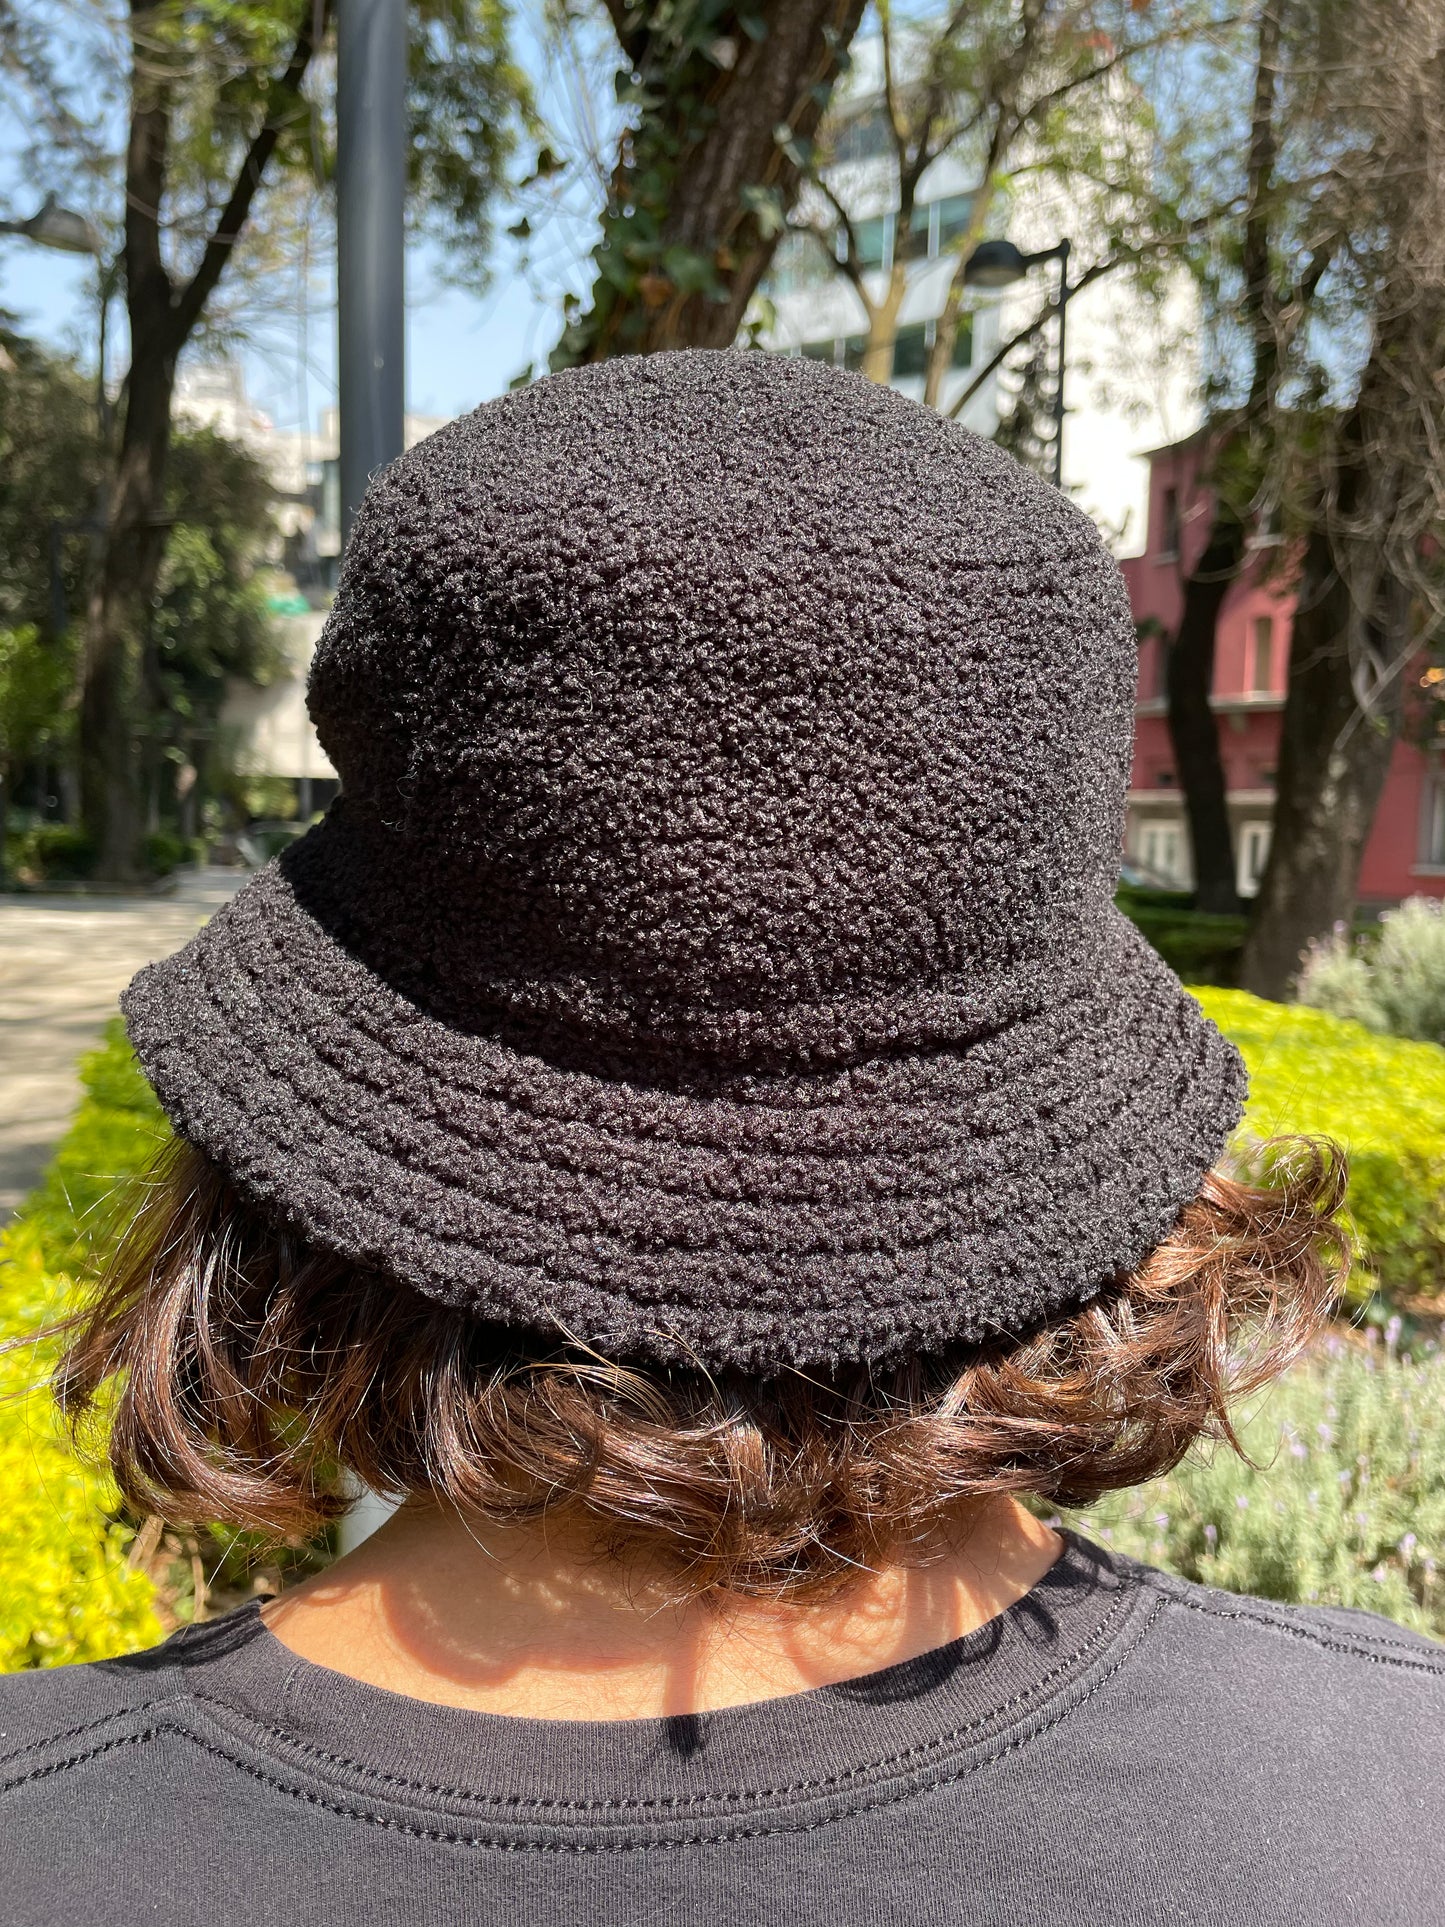 Black Squish Bucket Hat (One of One)